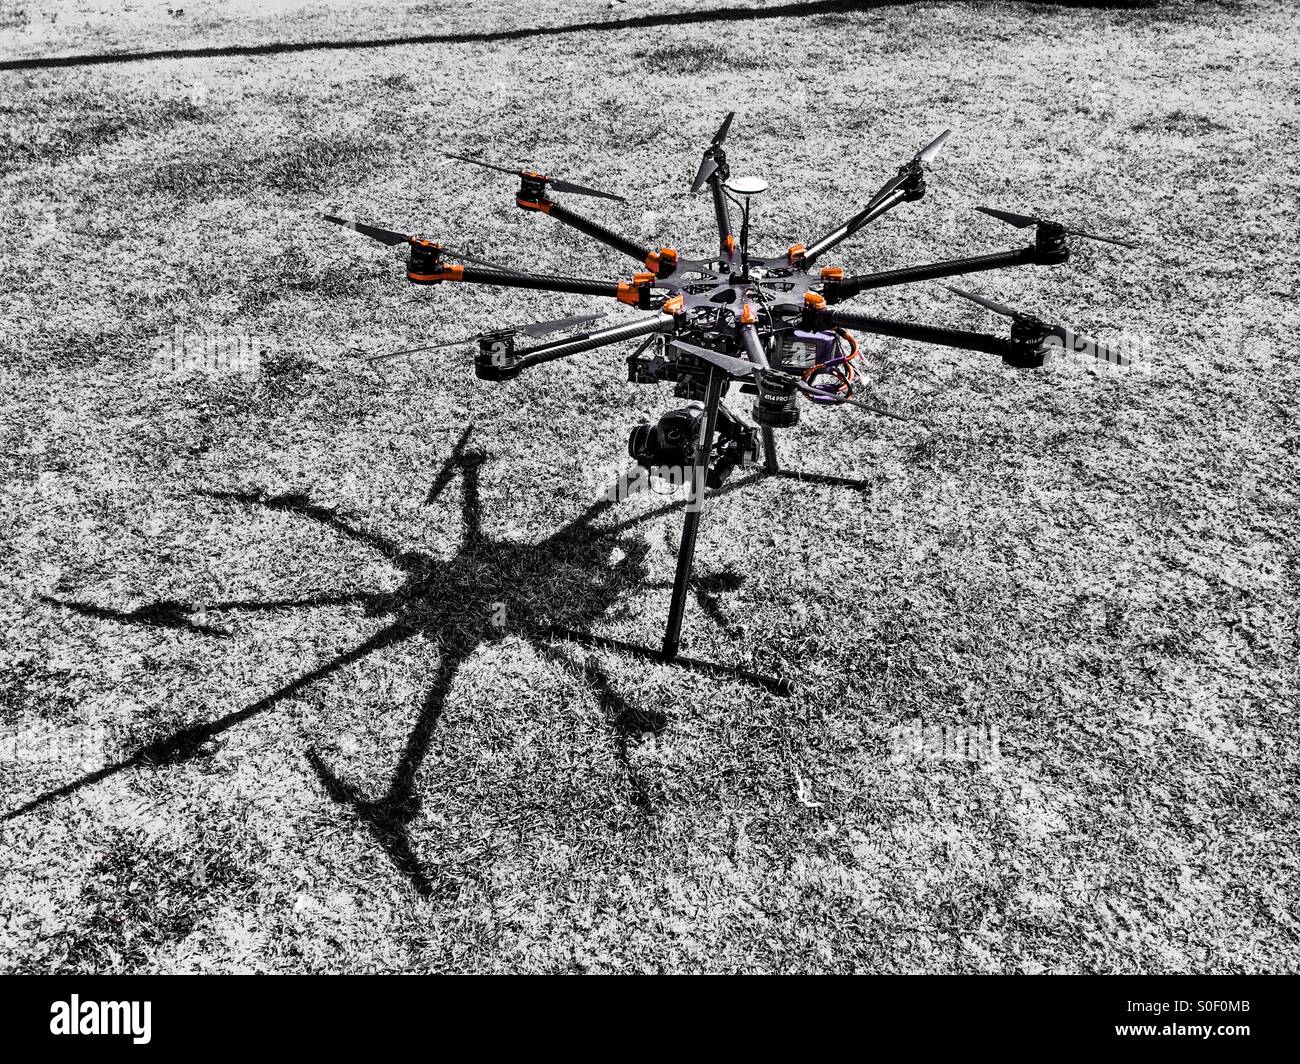 Canon 5D MK III telecamera attaccata a un telecomando octocopter drone Foto Stock